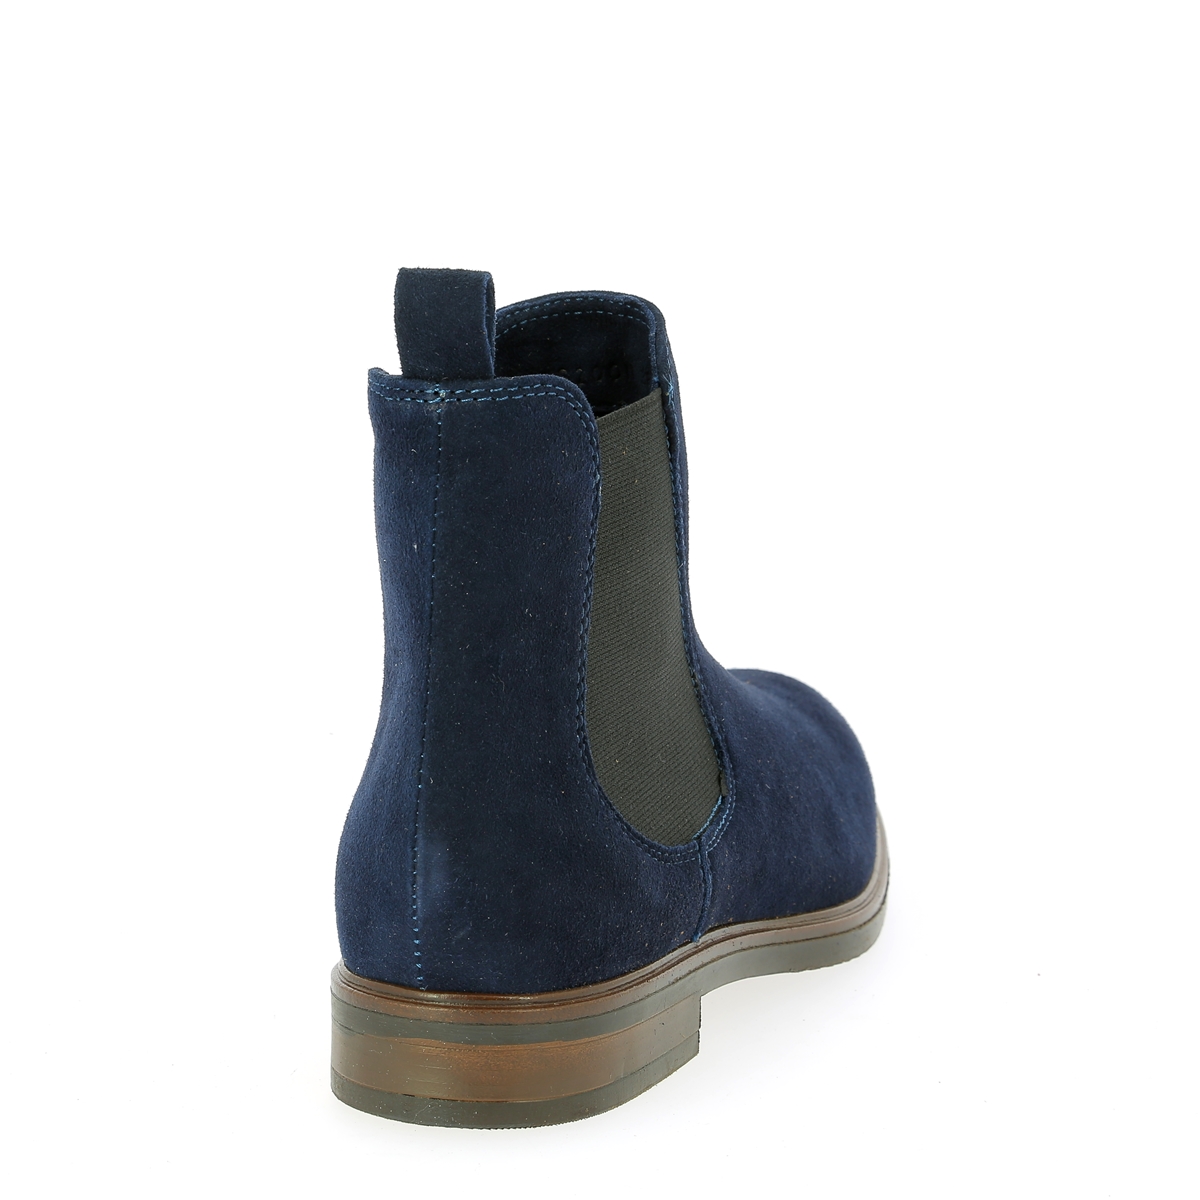 Gioia Boots bleu